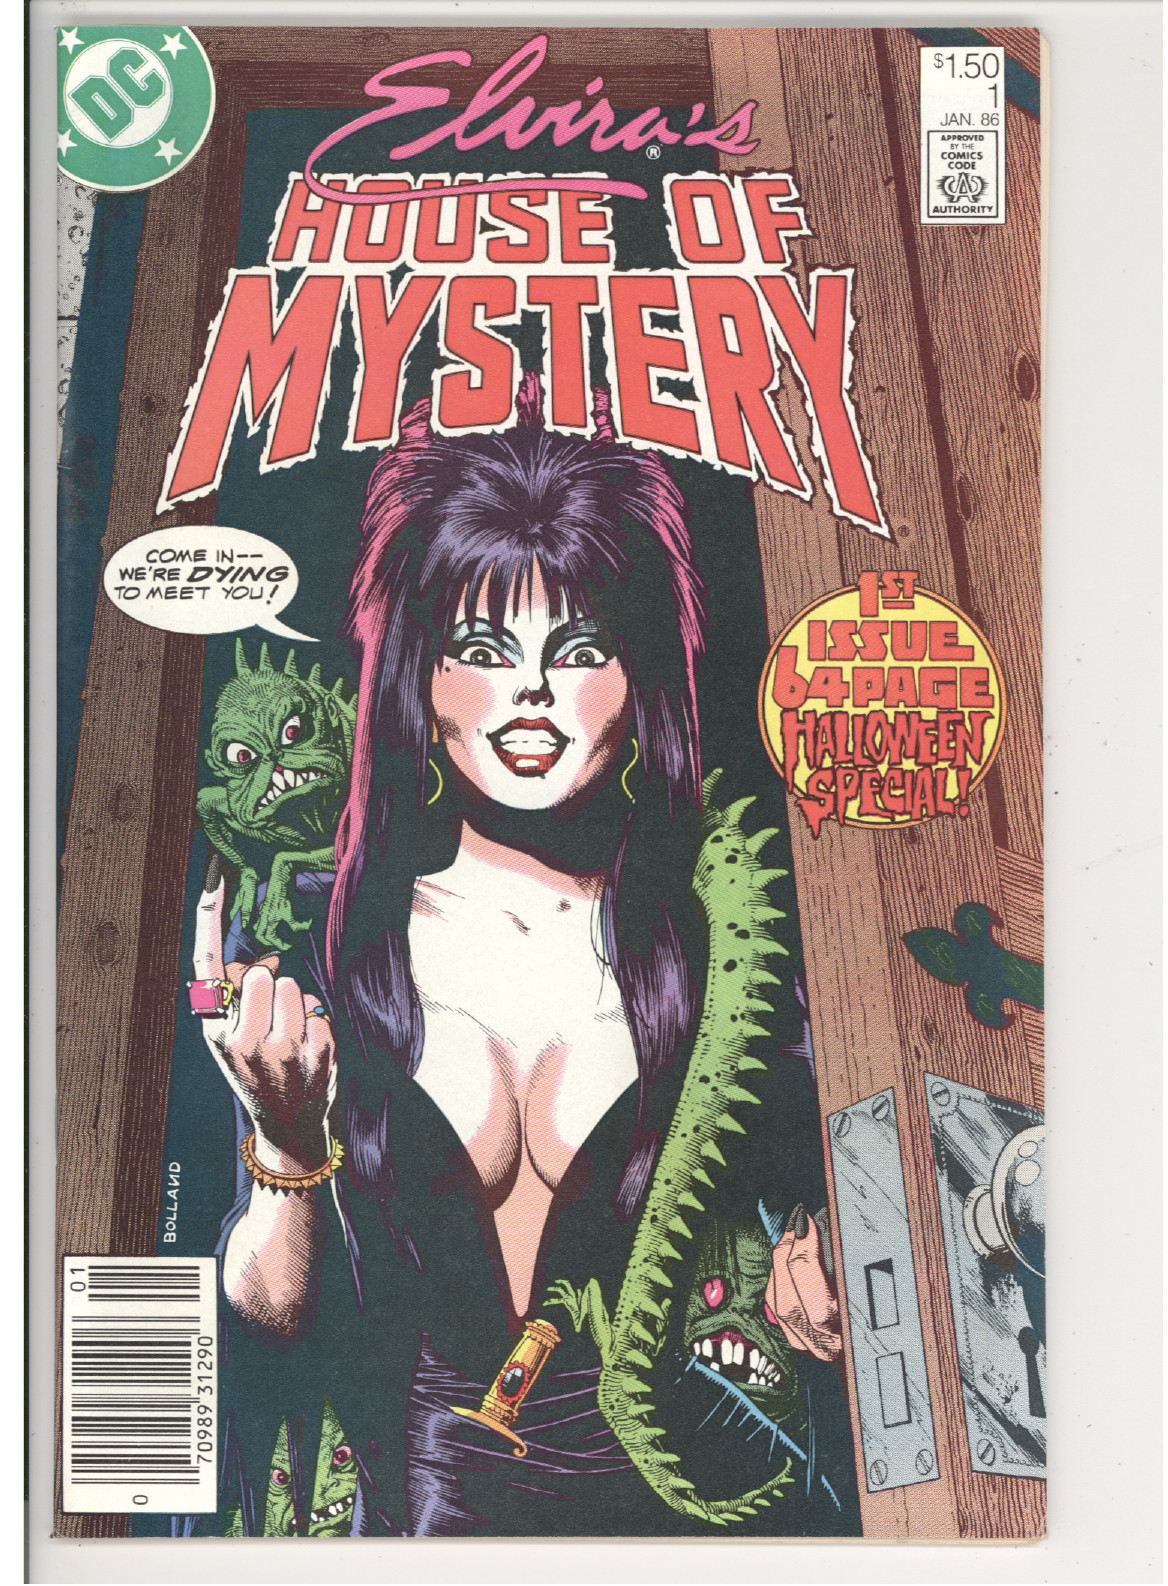 Elvira's House of Mystery   #1